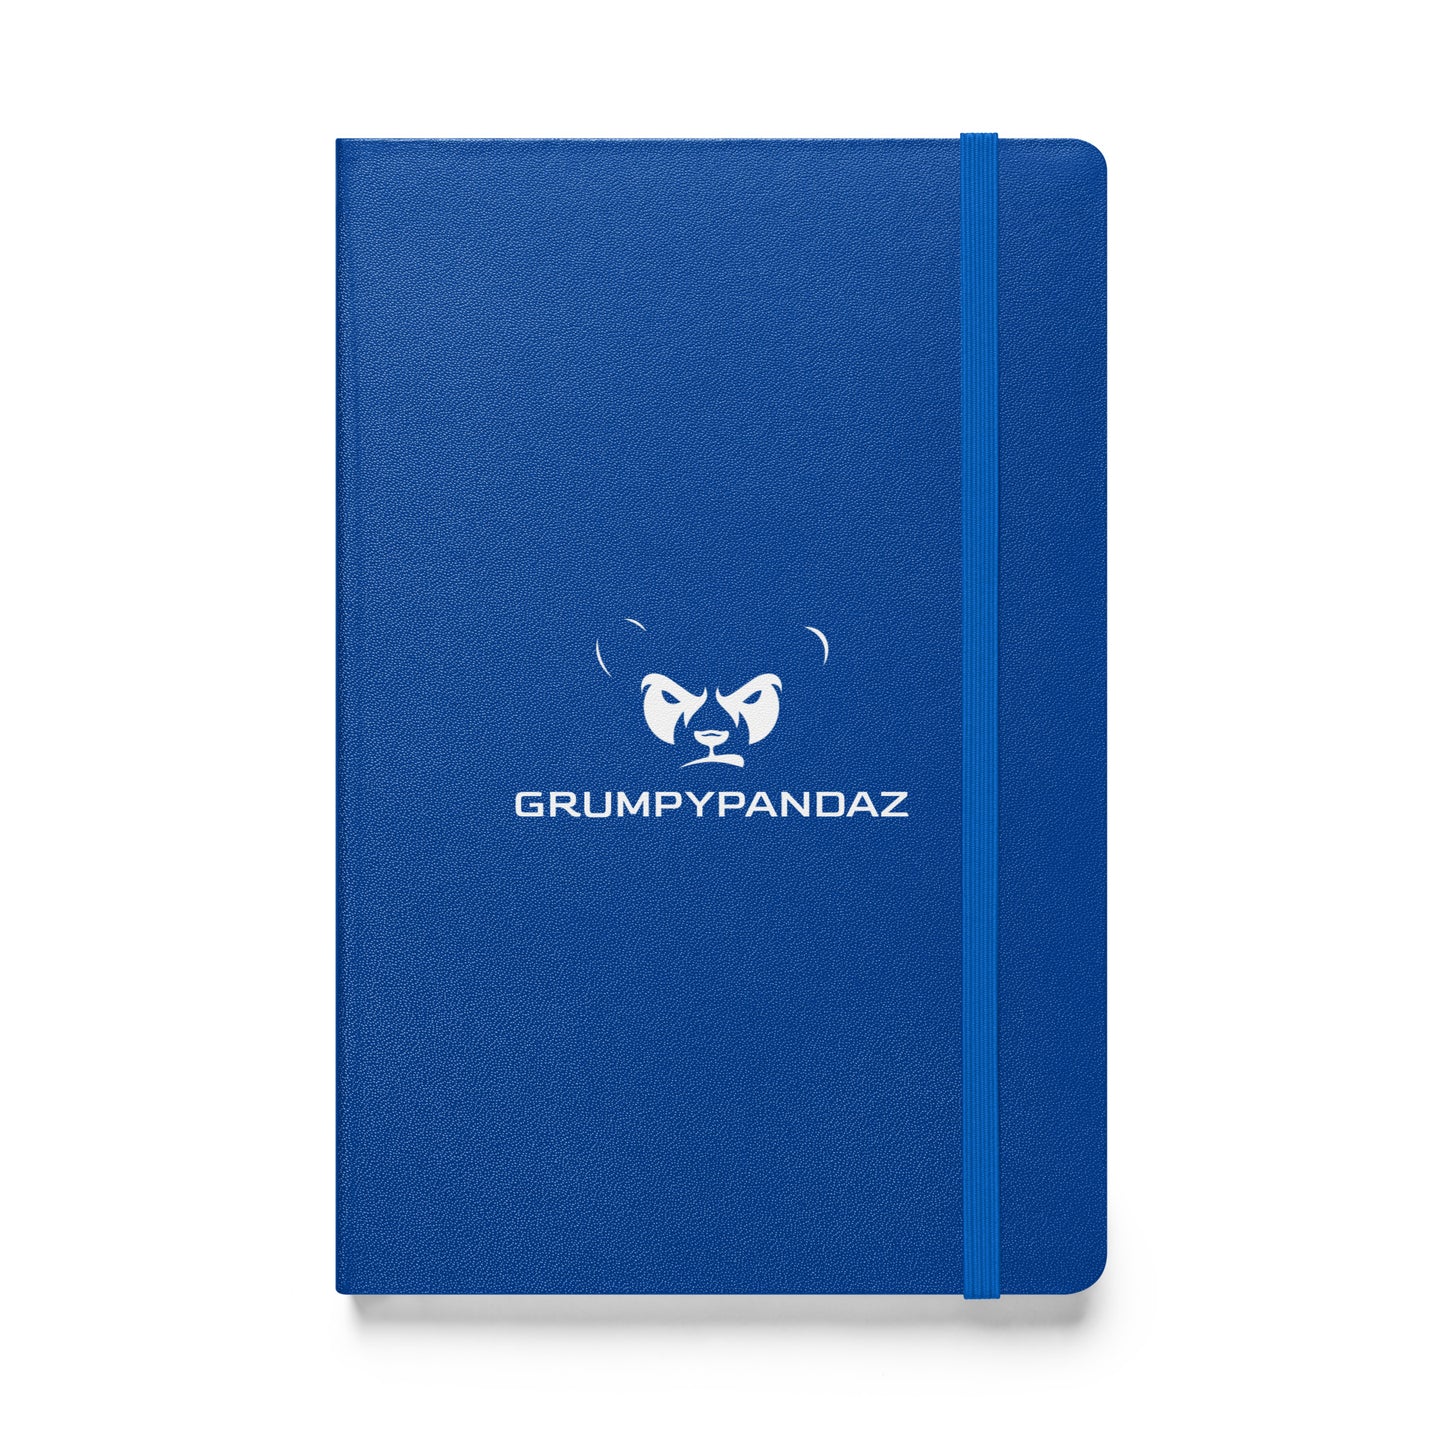 GrumpyPandaz Hardcover bound notebook